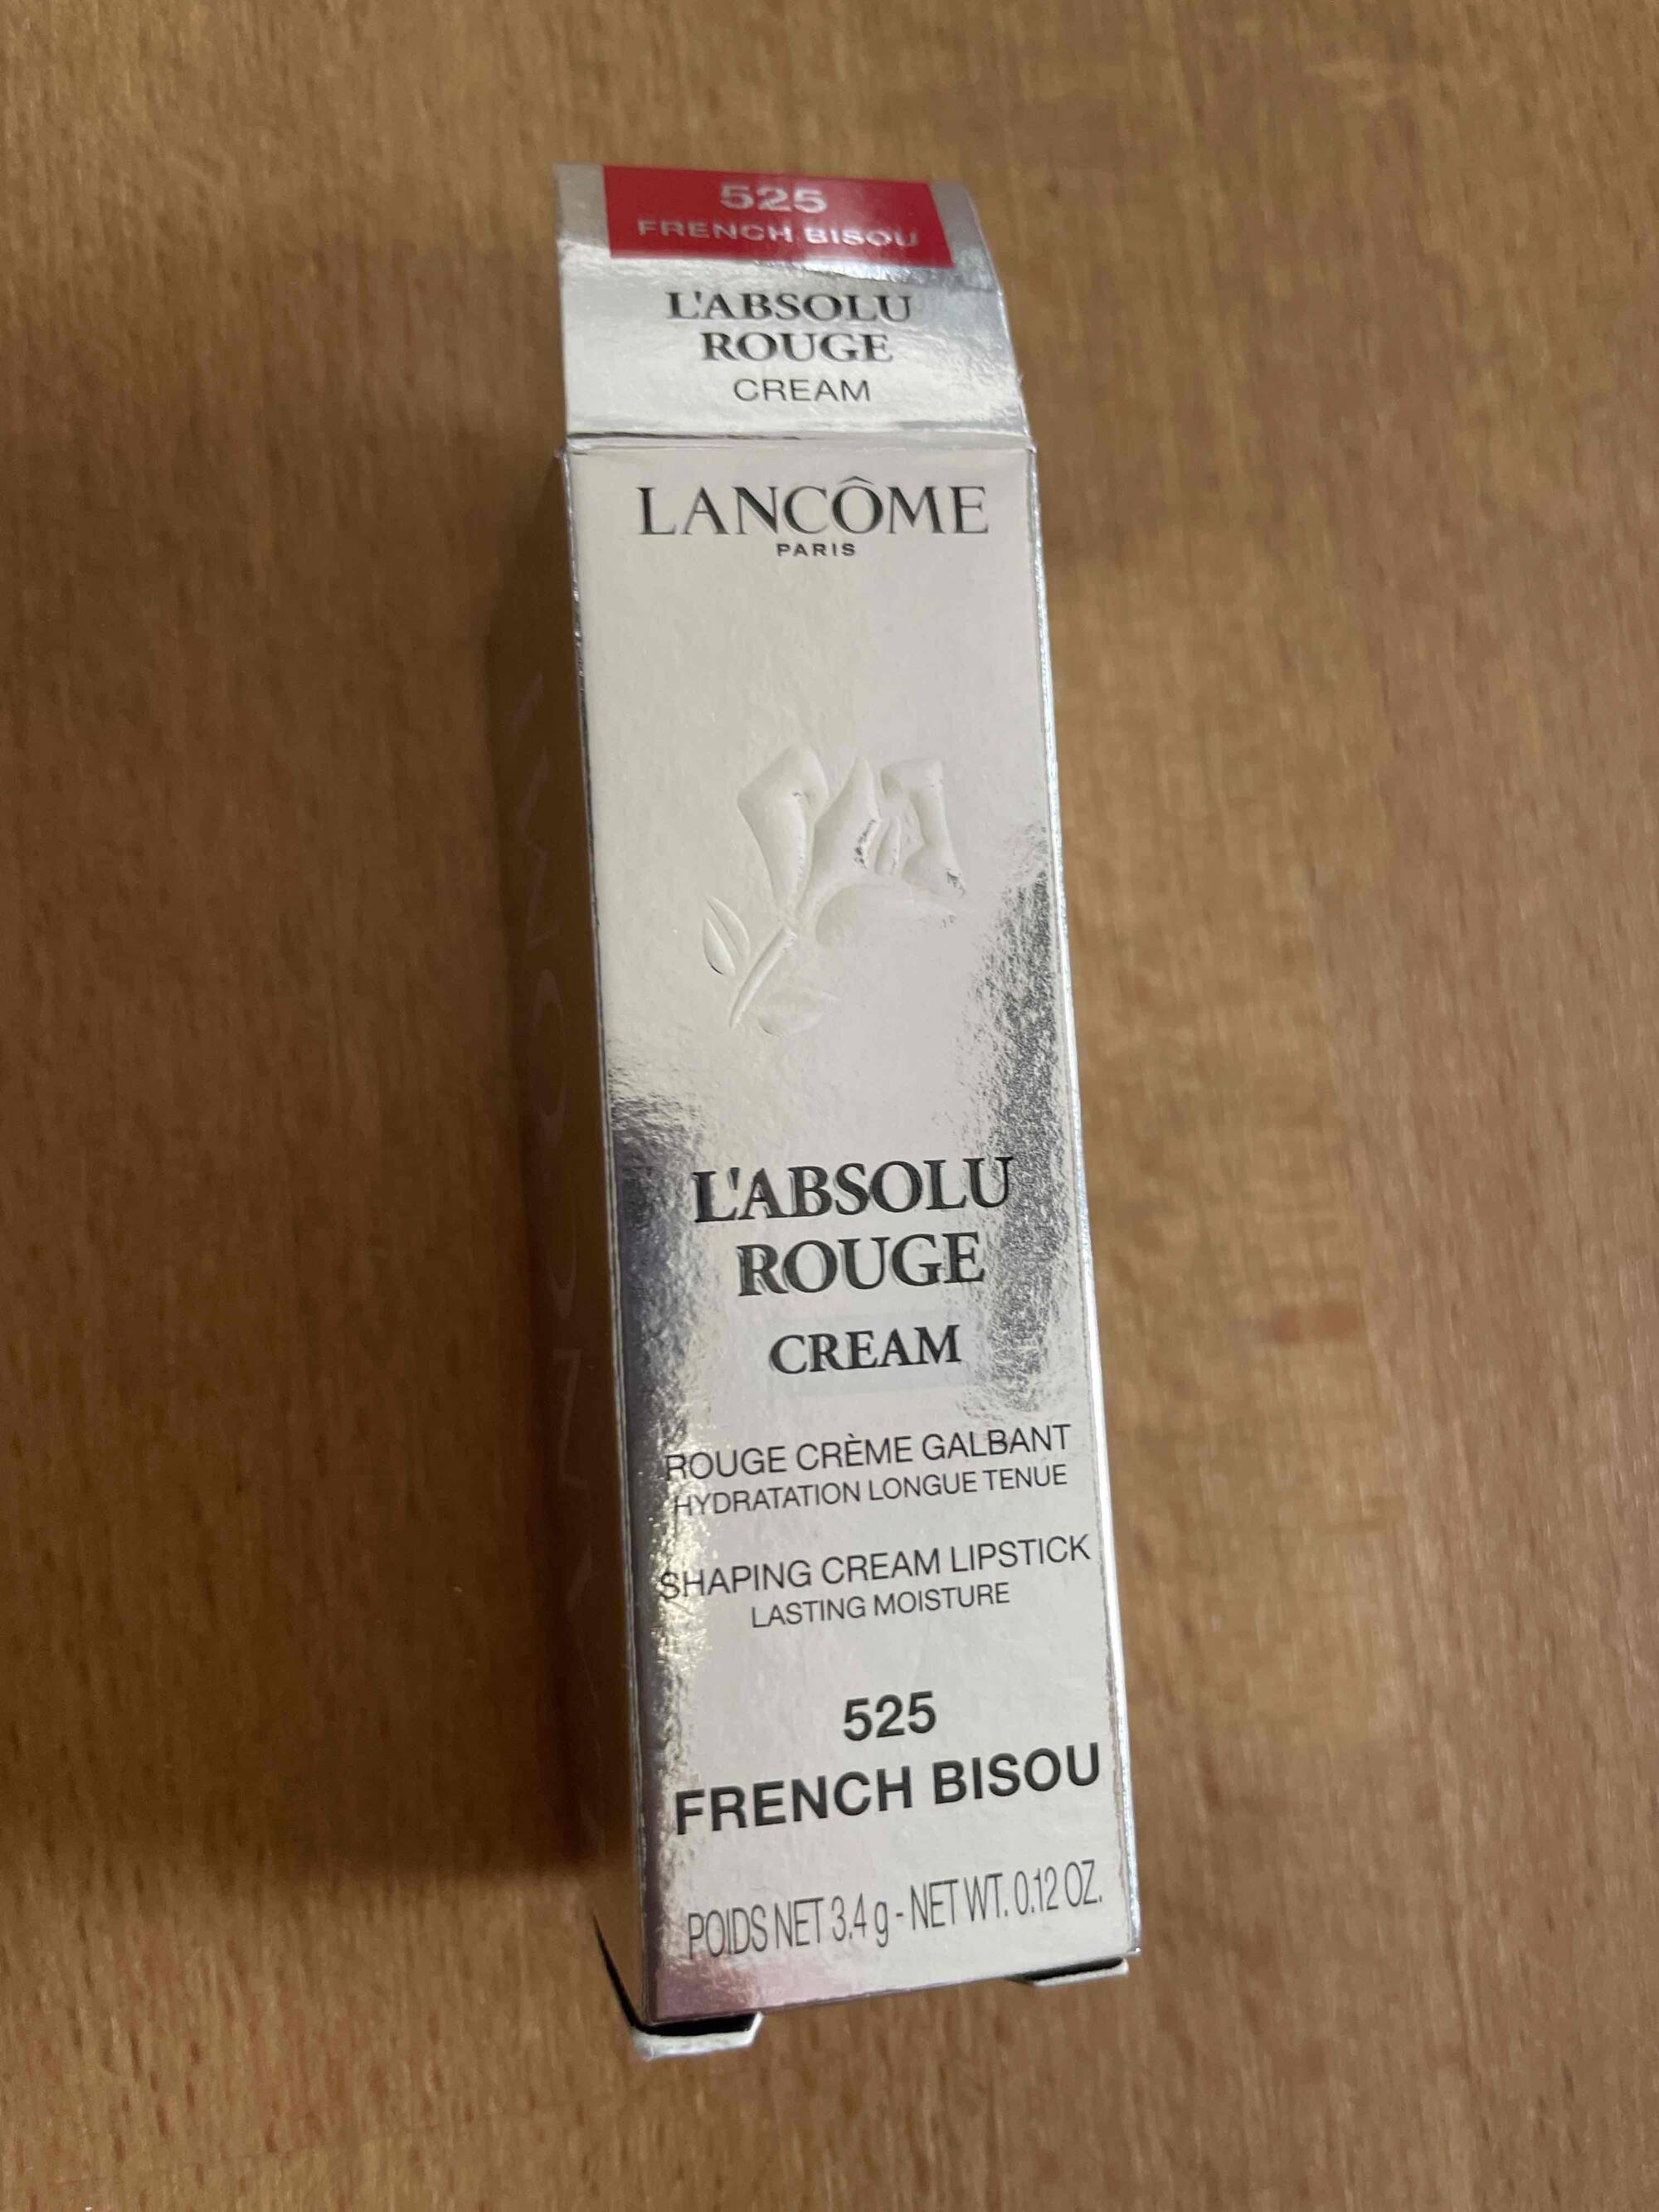 LANCÔME - L'absolu rouge crème galbant 525 french bisou